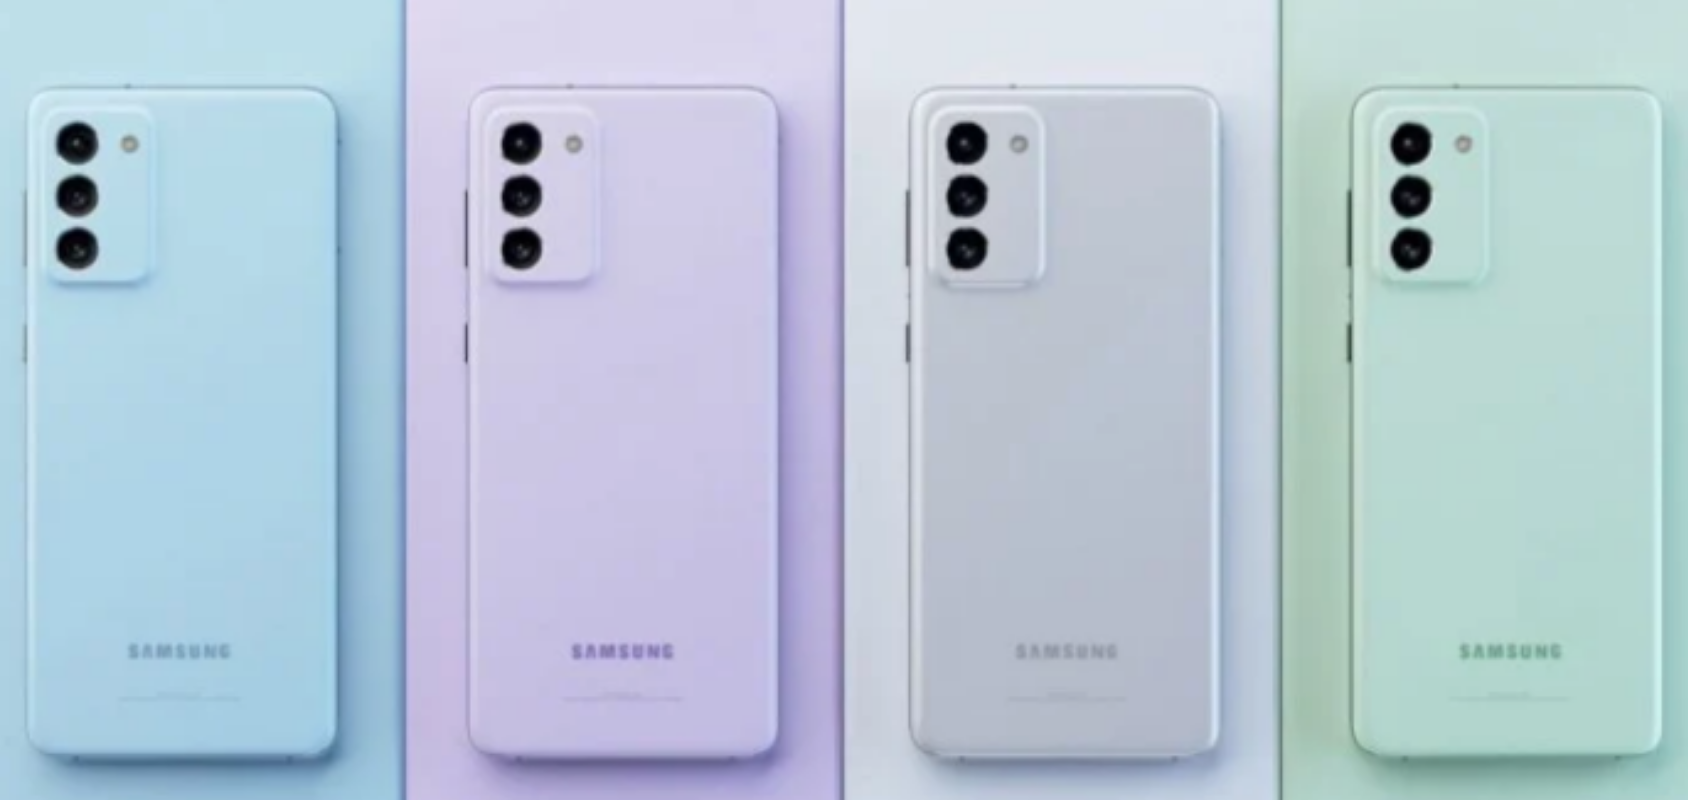 Samsung Galaxy S21 FE price